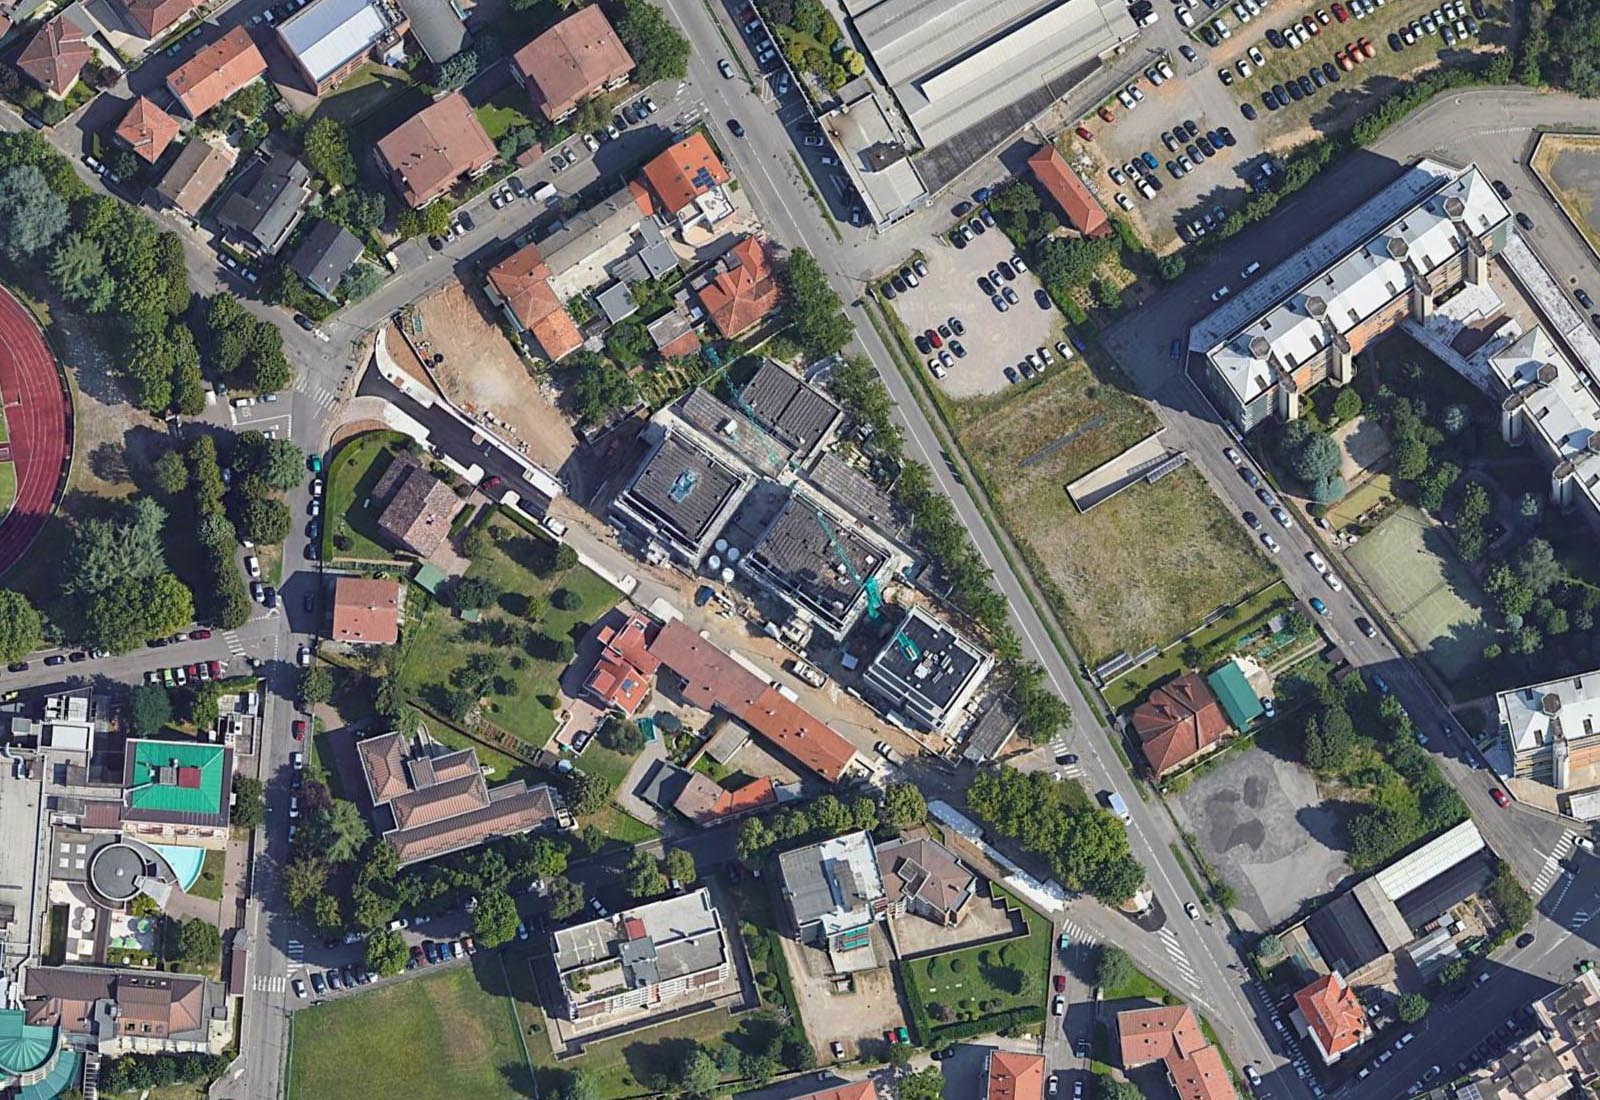 Residential buildings in Biringhello street in Rho - Zenithal aerial view